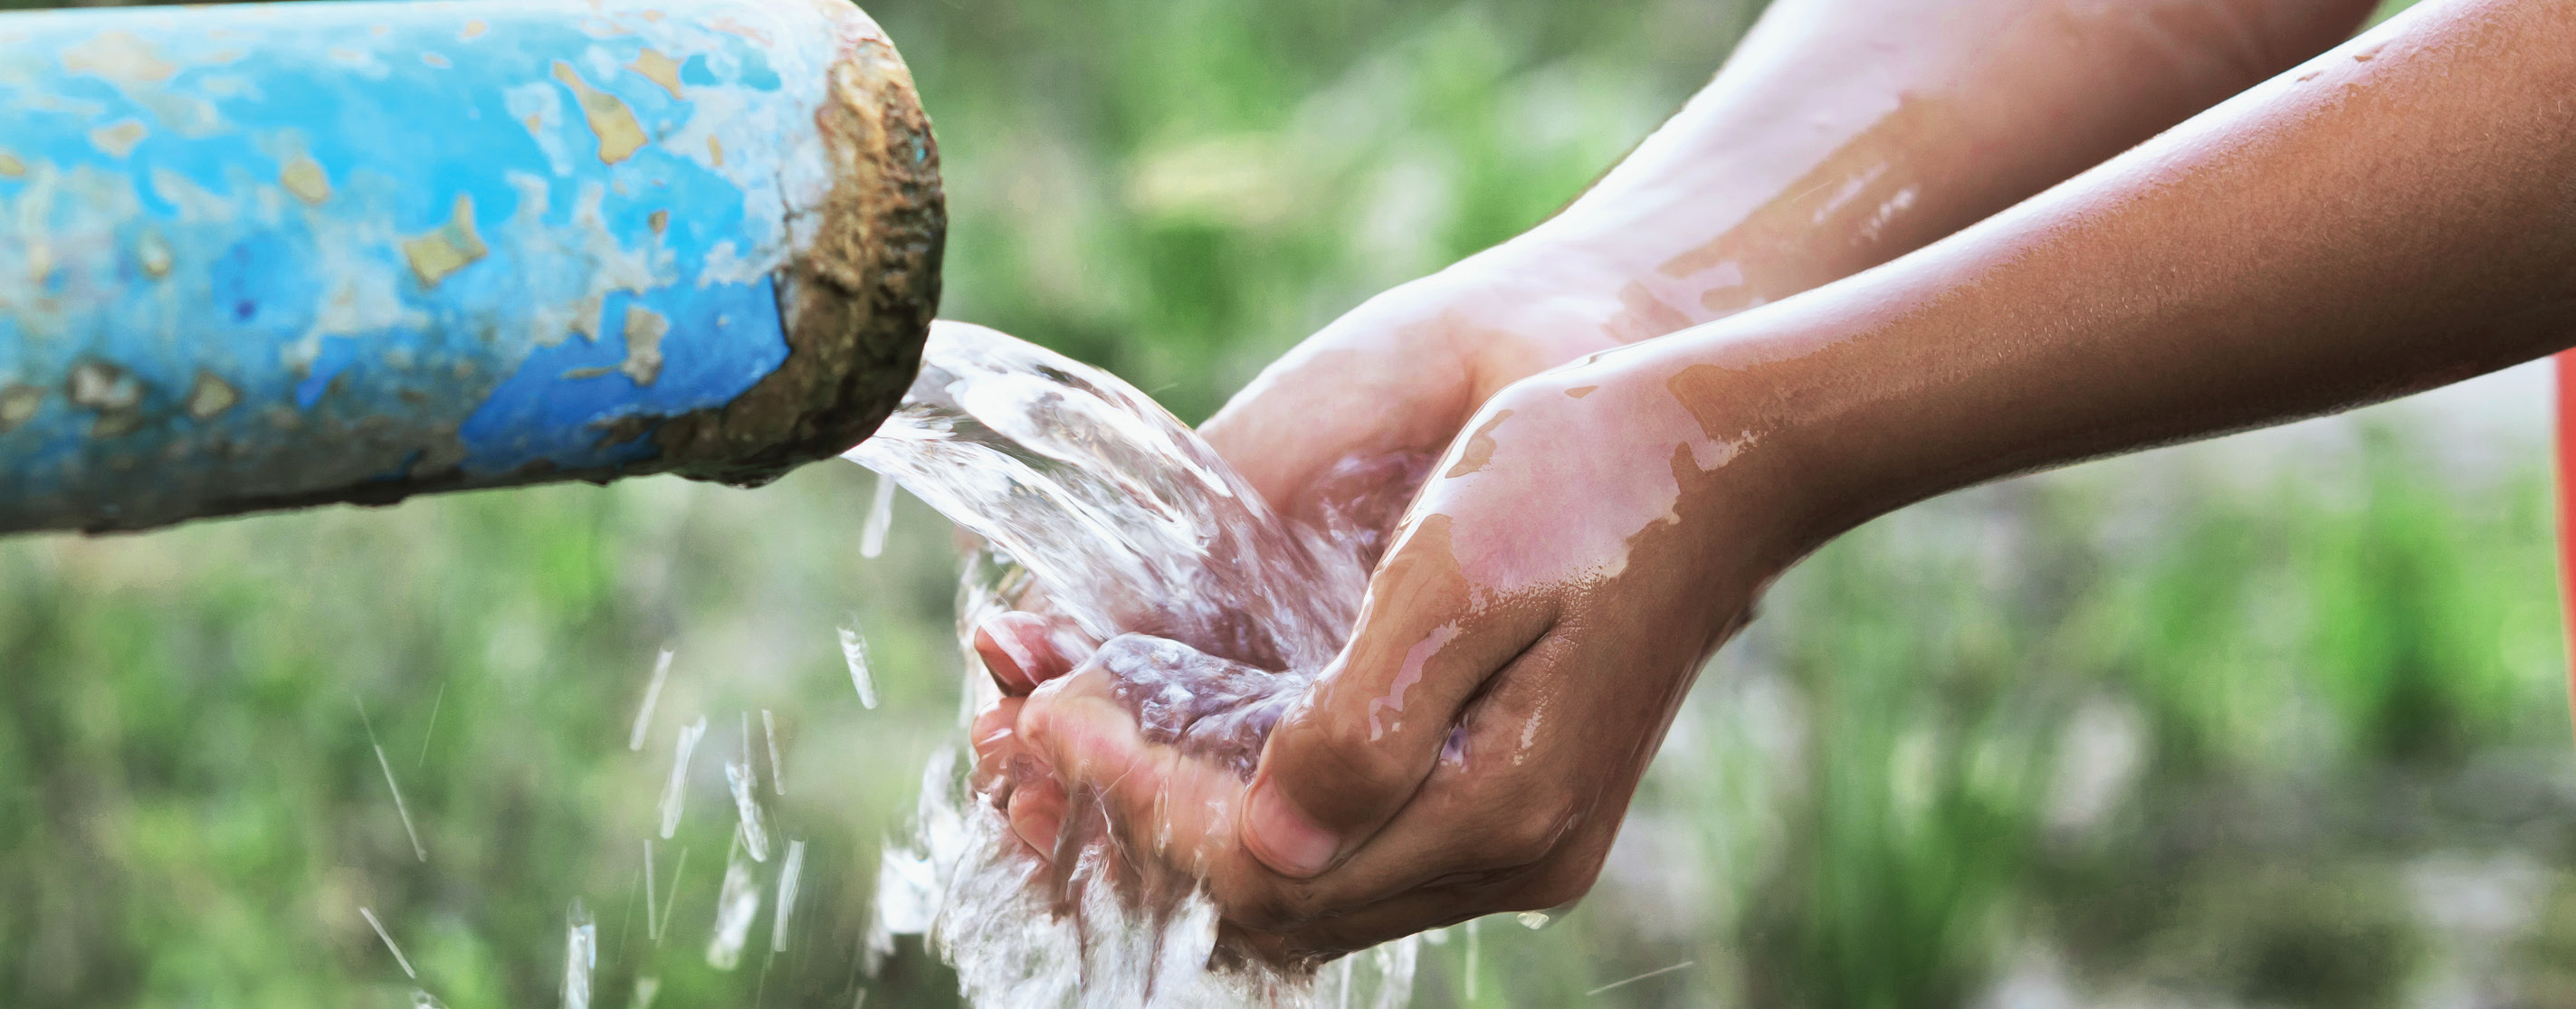 UTEP Professor helps Provide Safe Water to Underserved Texans 